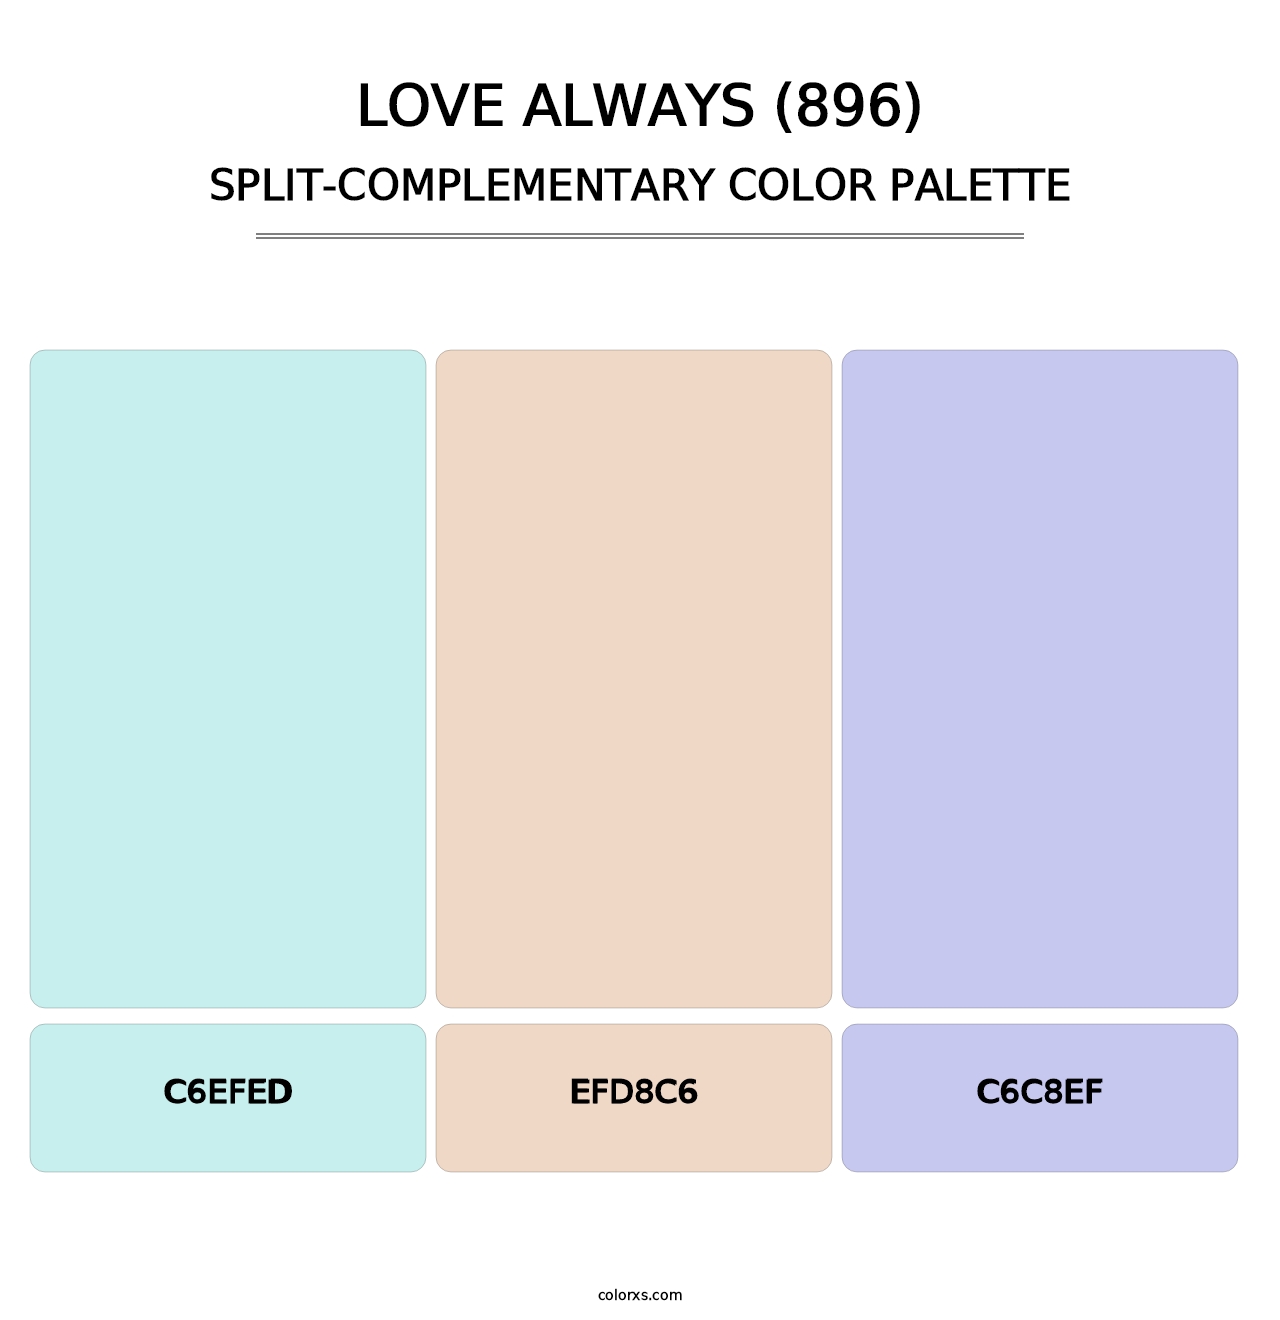 Love Always (896) - Split-Complementary Color Palette